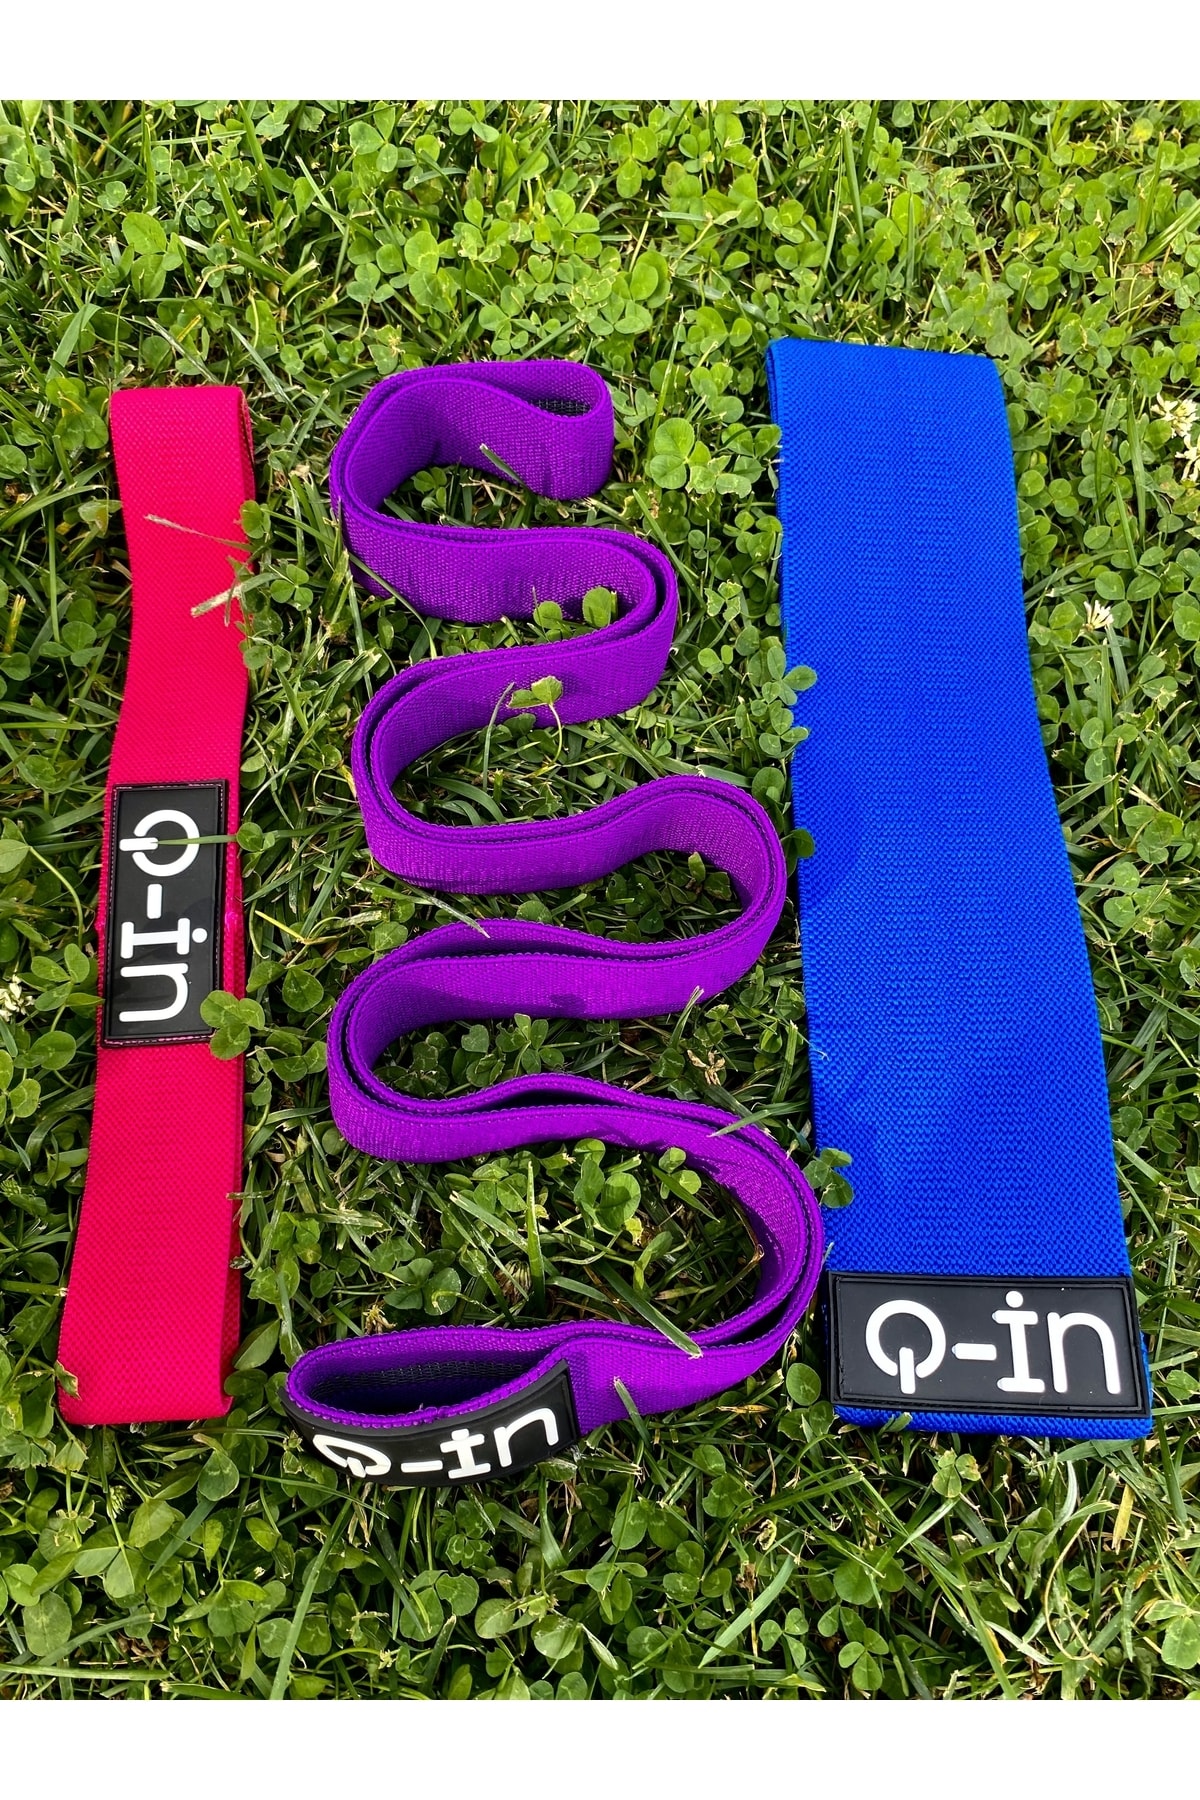 Q-İN 3’lü Set (mini / Loop / Squat) Direnç Lastiği, Pilates Bandı ZR8196